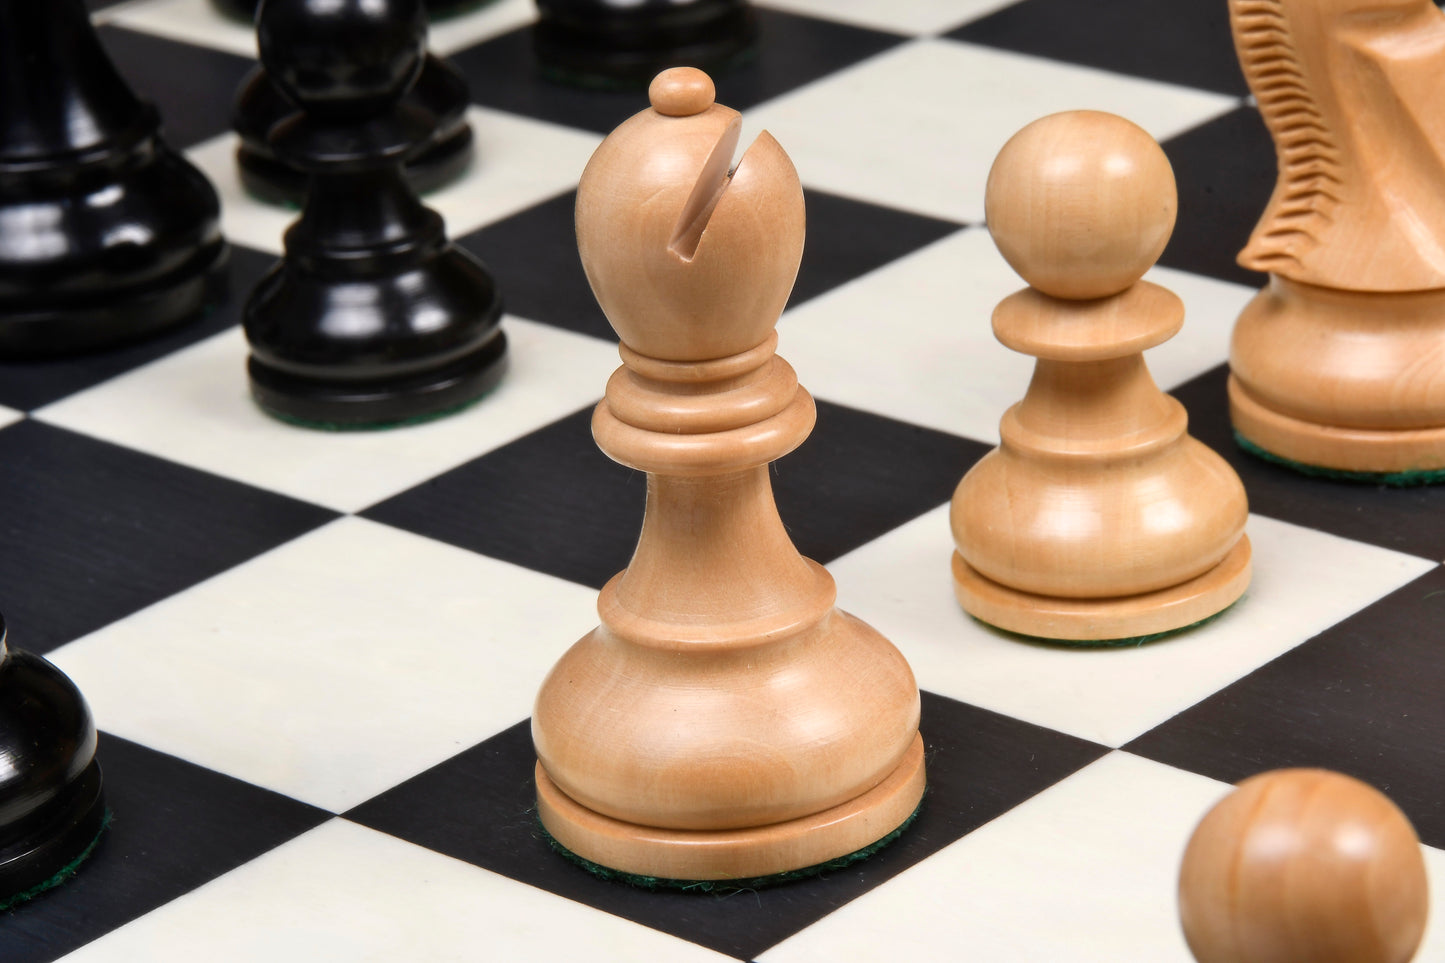 Reproduced 1972 Reykjavik Staunton Chess Pieces in Ebonized Boxwood & Natural Boxwood - 3.7" King